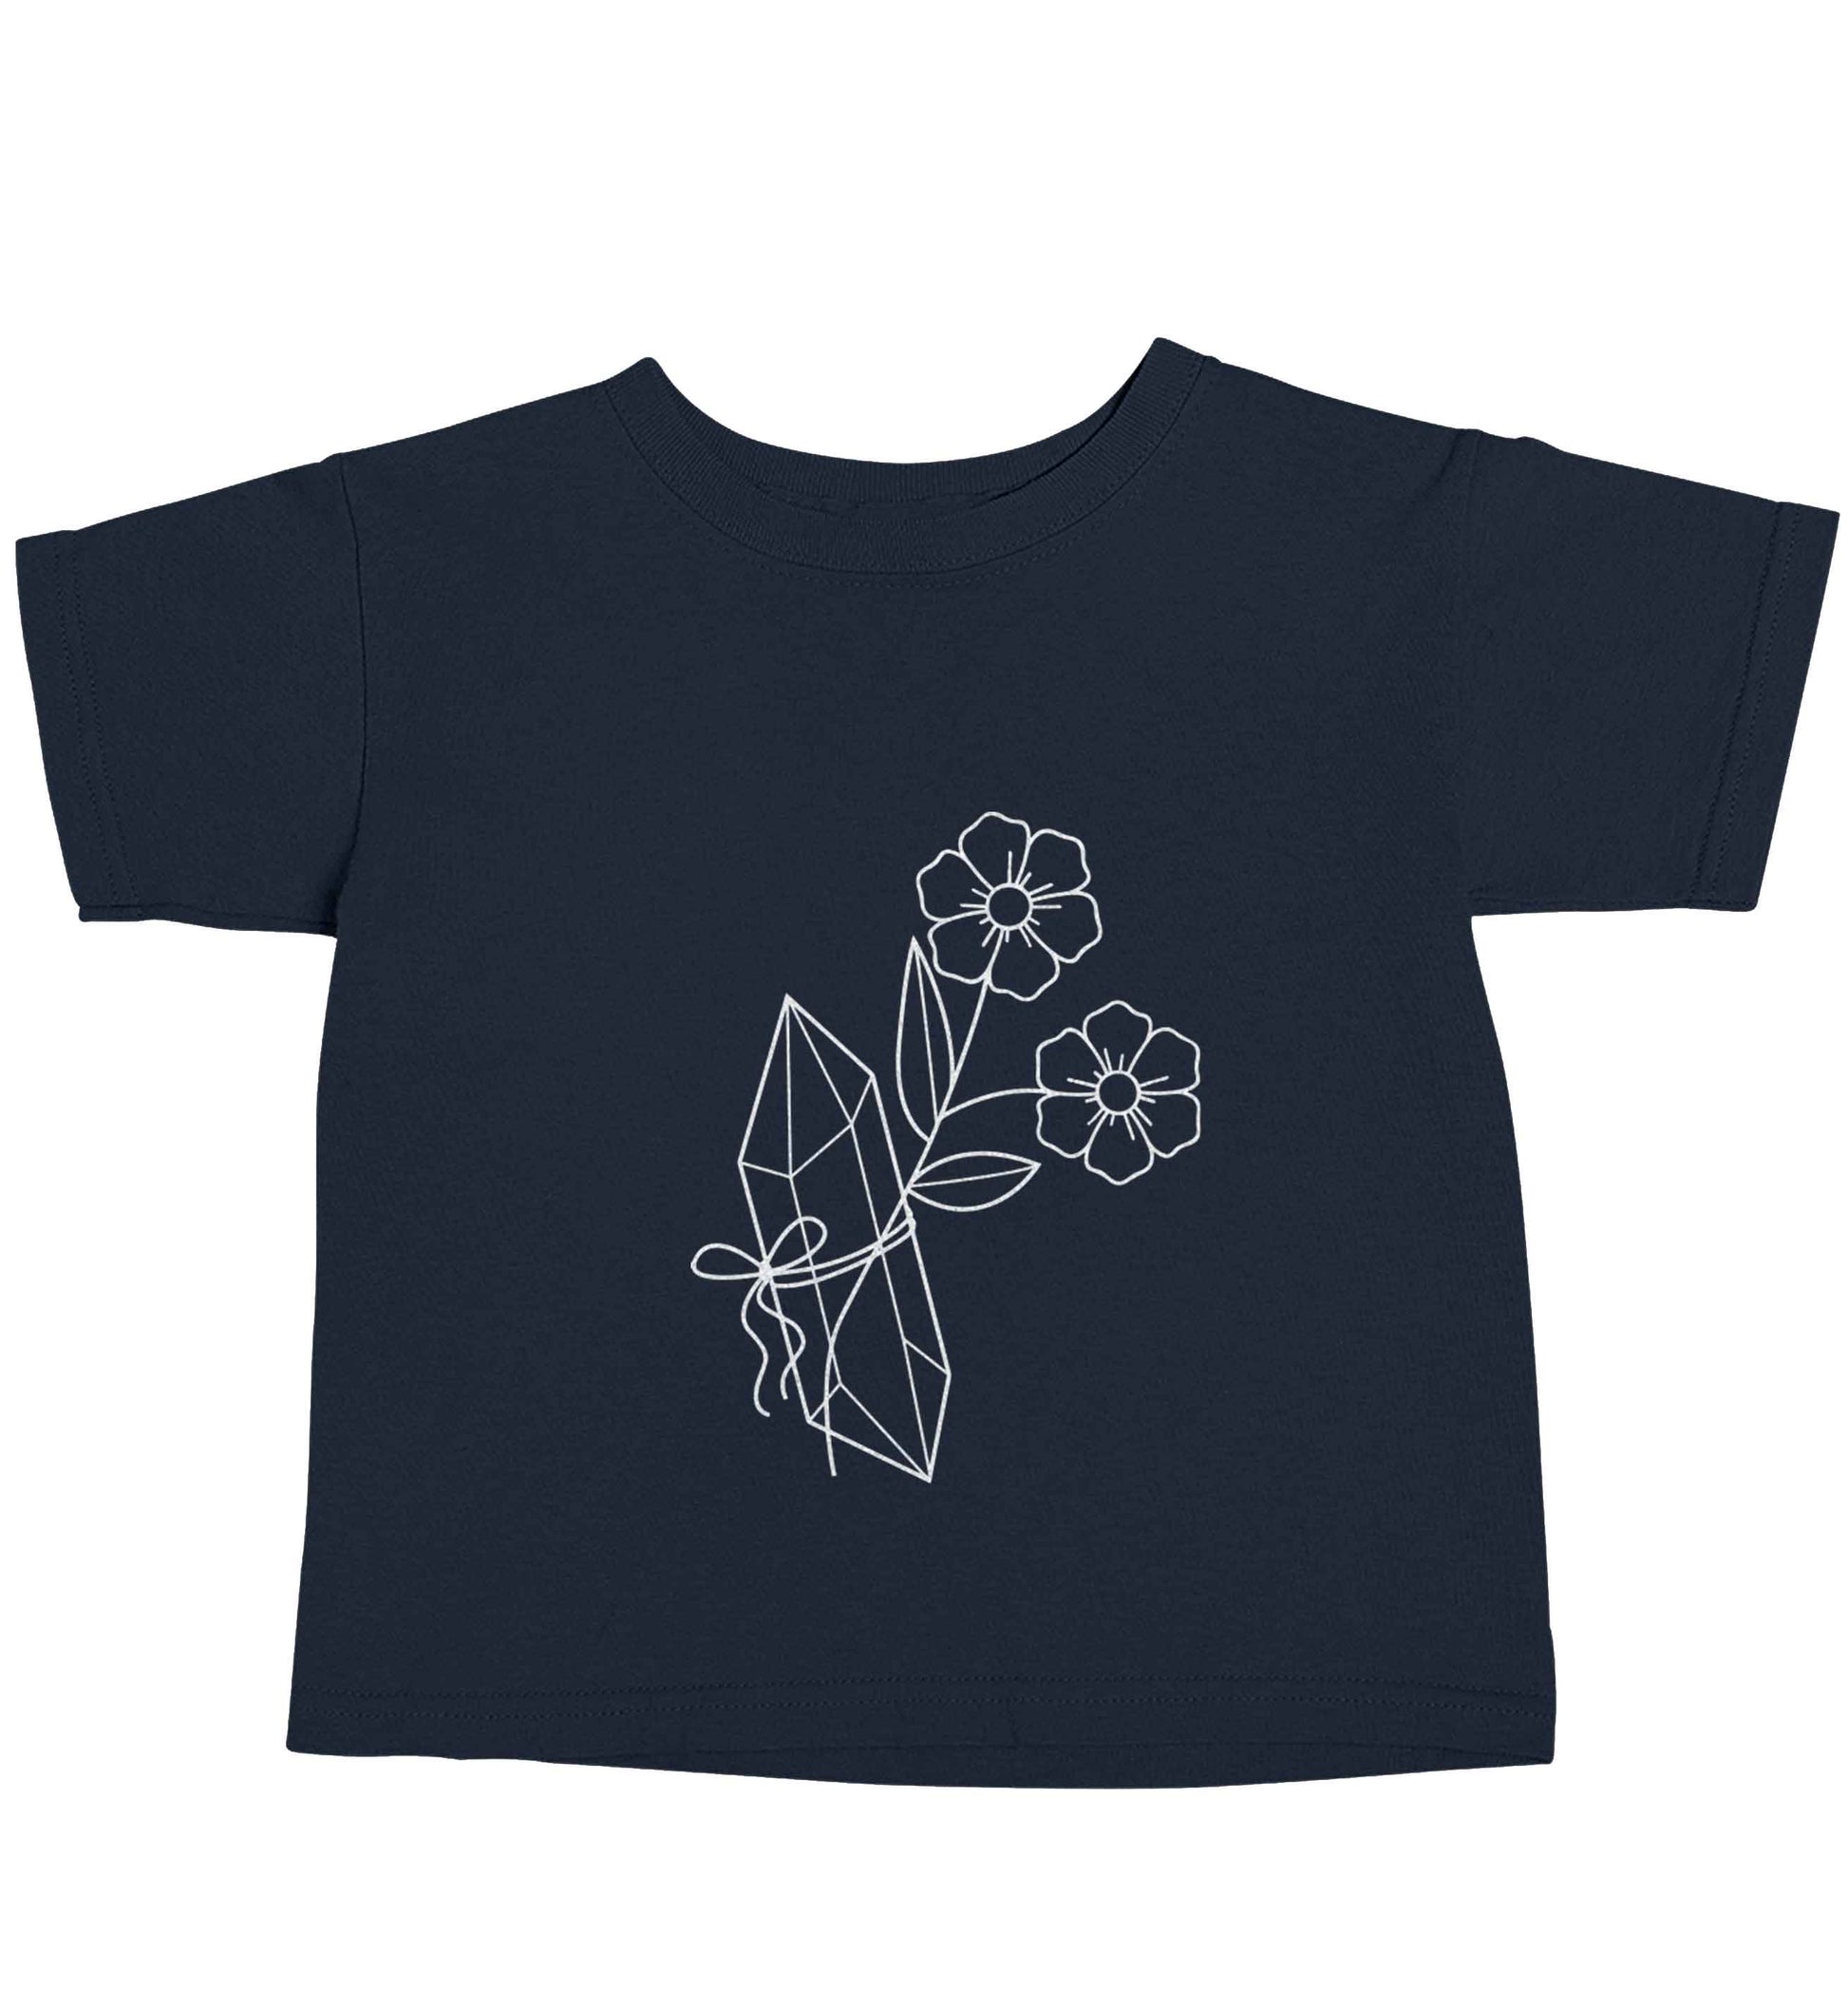 Crystal flower illustration navy baby toddler Tshirt 2 Years